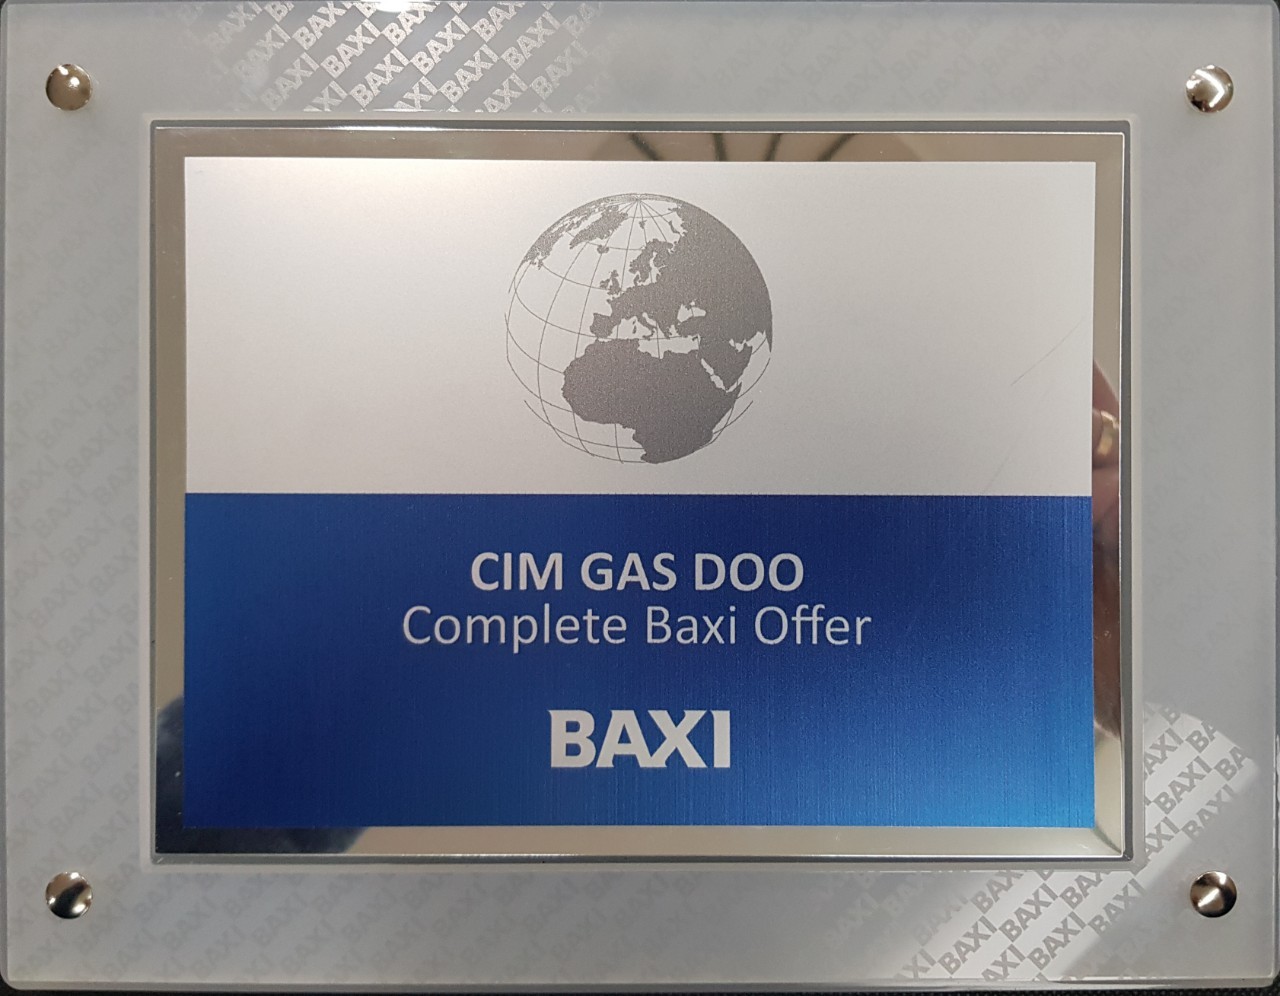 CIM GAS - BAXI Sales Award 2018